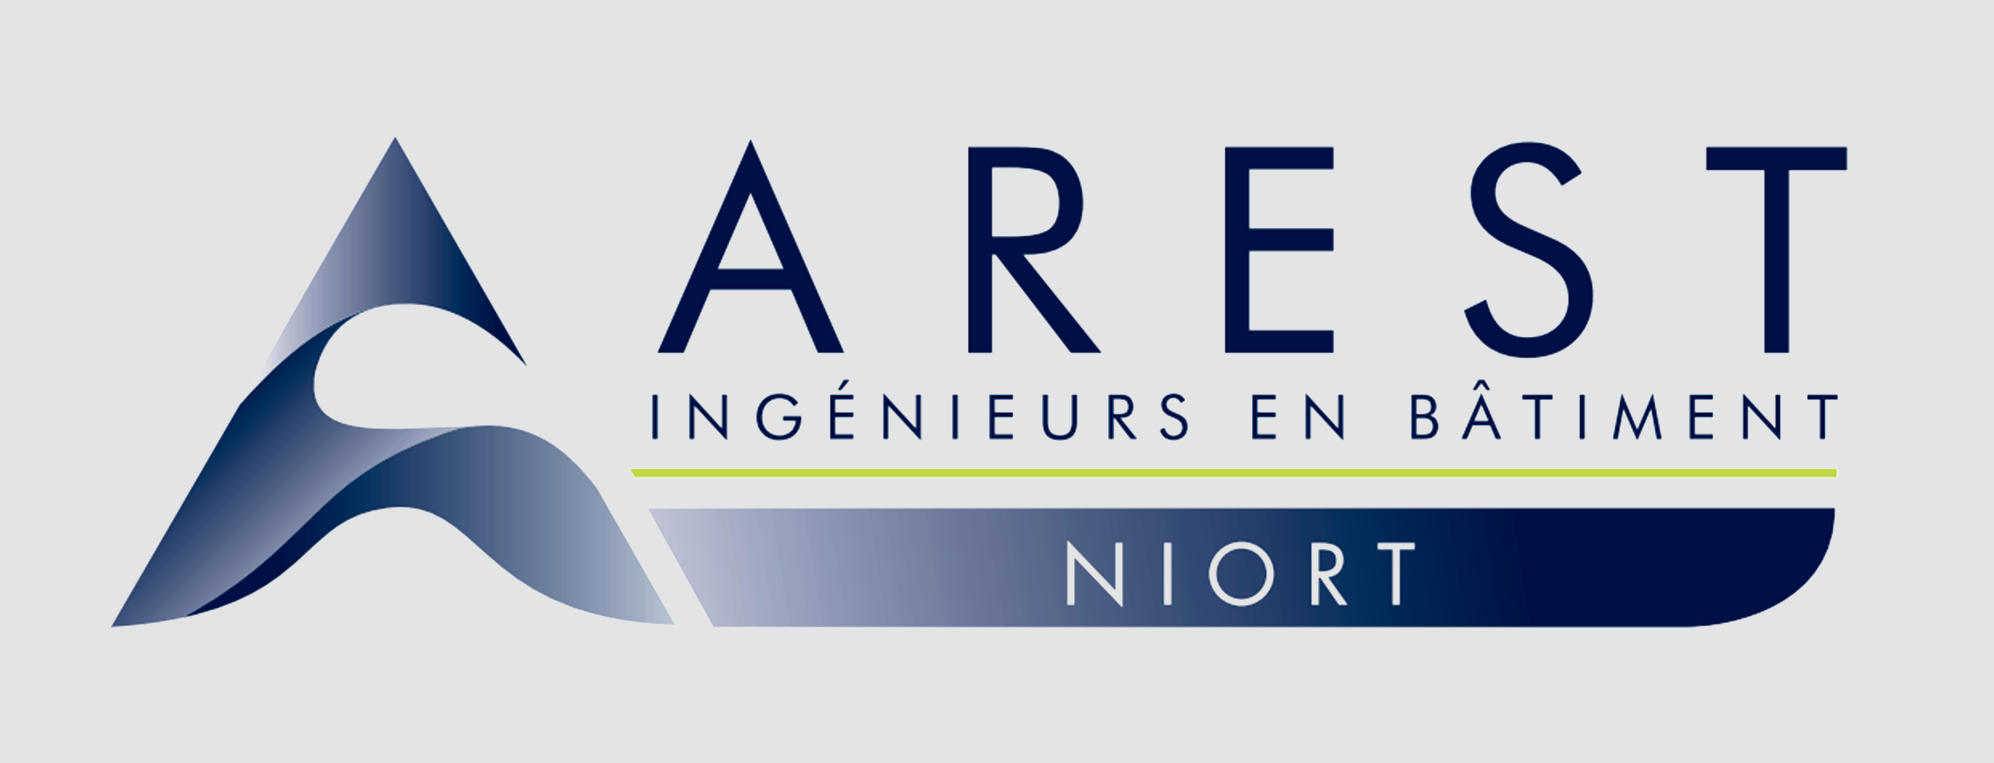 AREST Niort logo 2